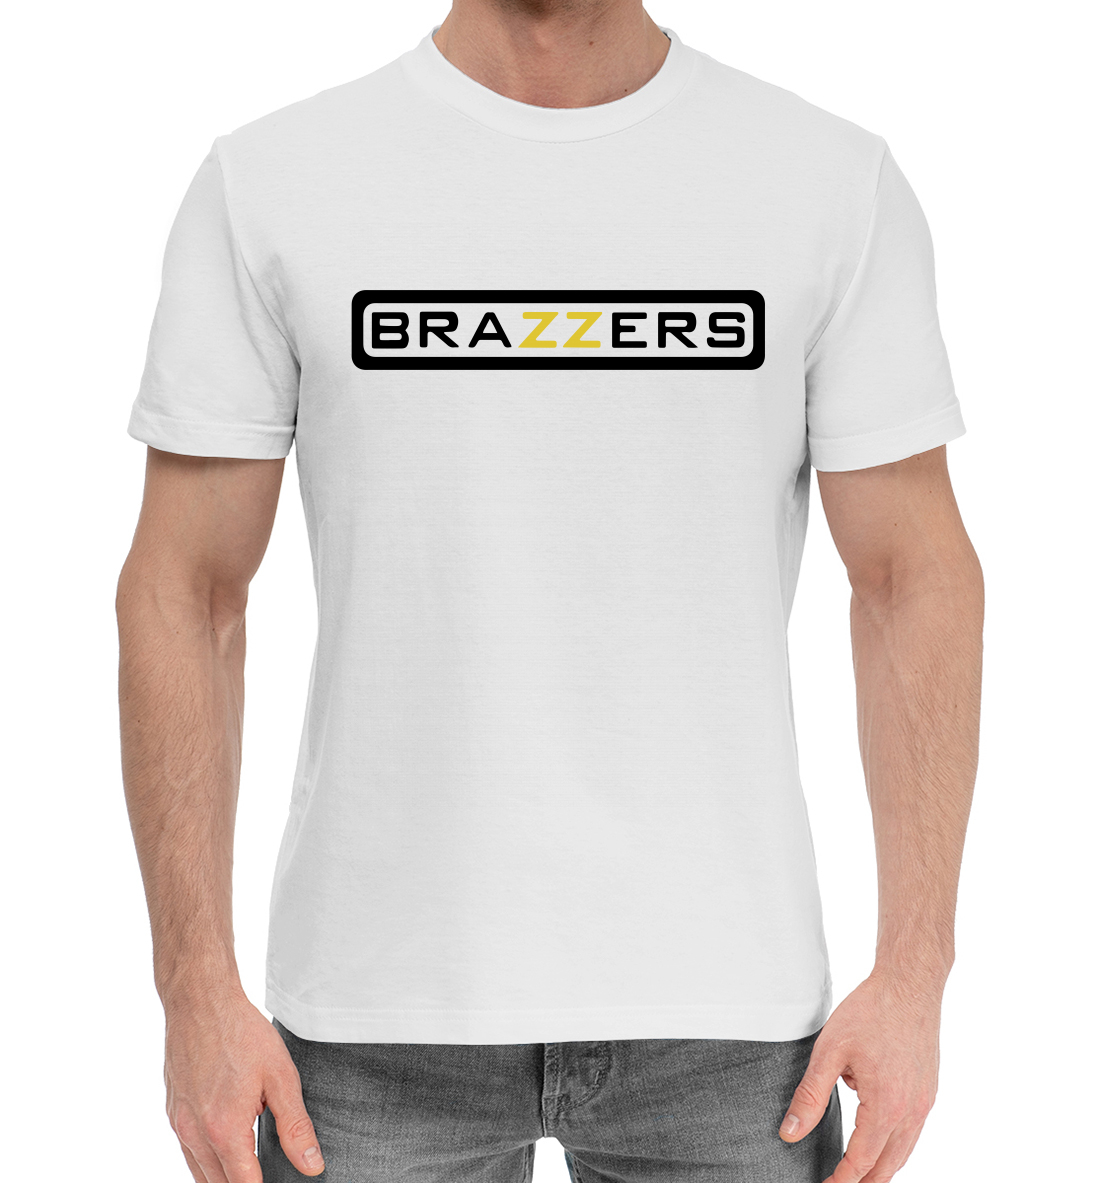 Мужская Хлопковая футболка с надписью Brazzers, артикул BRZ-364012-hfu-2mp